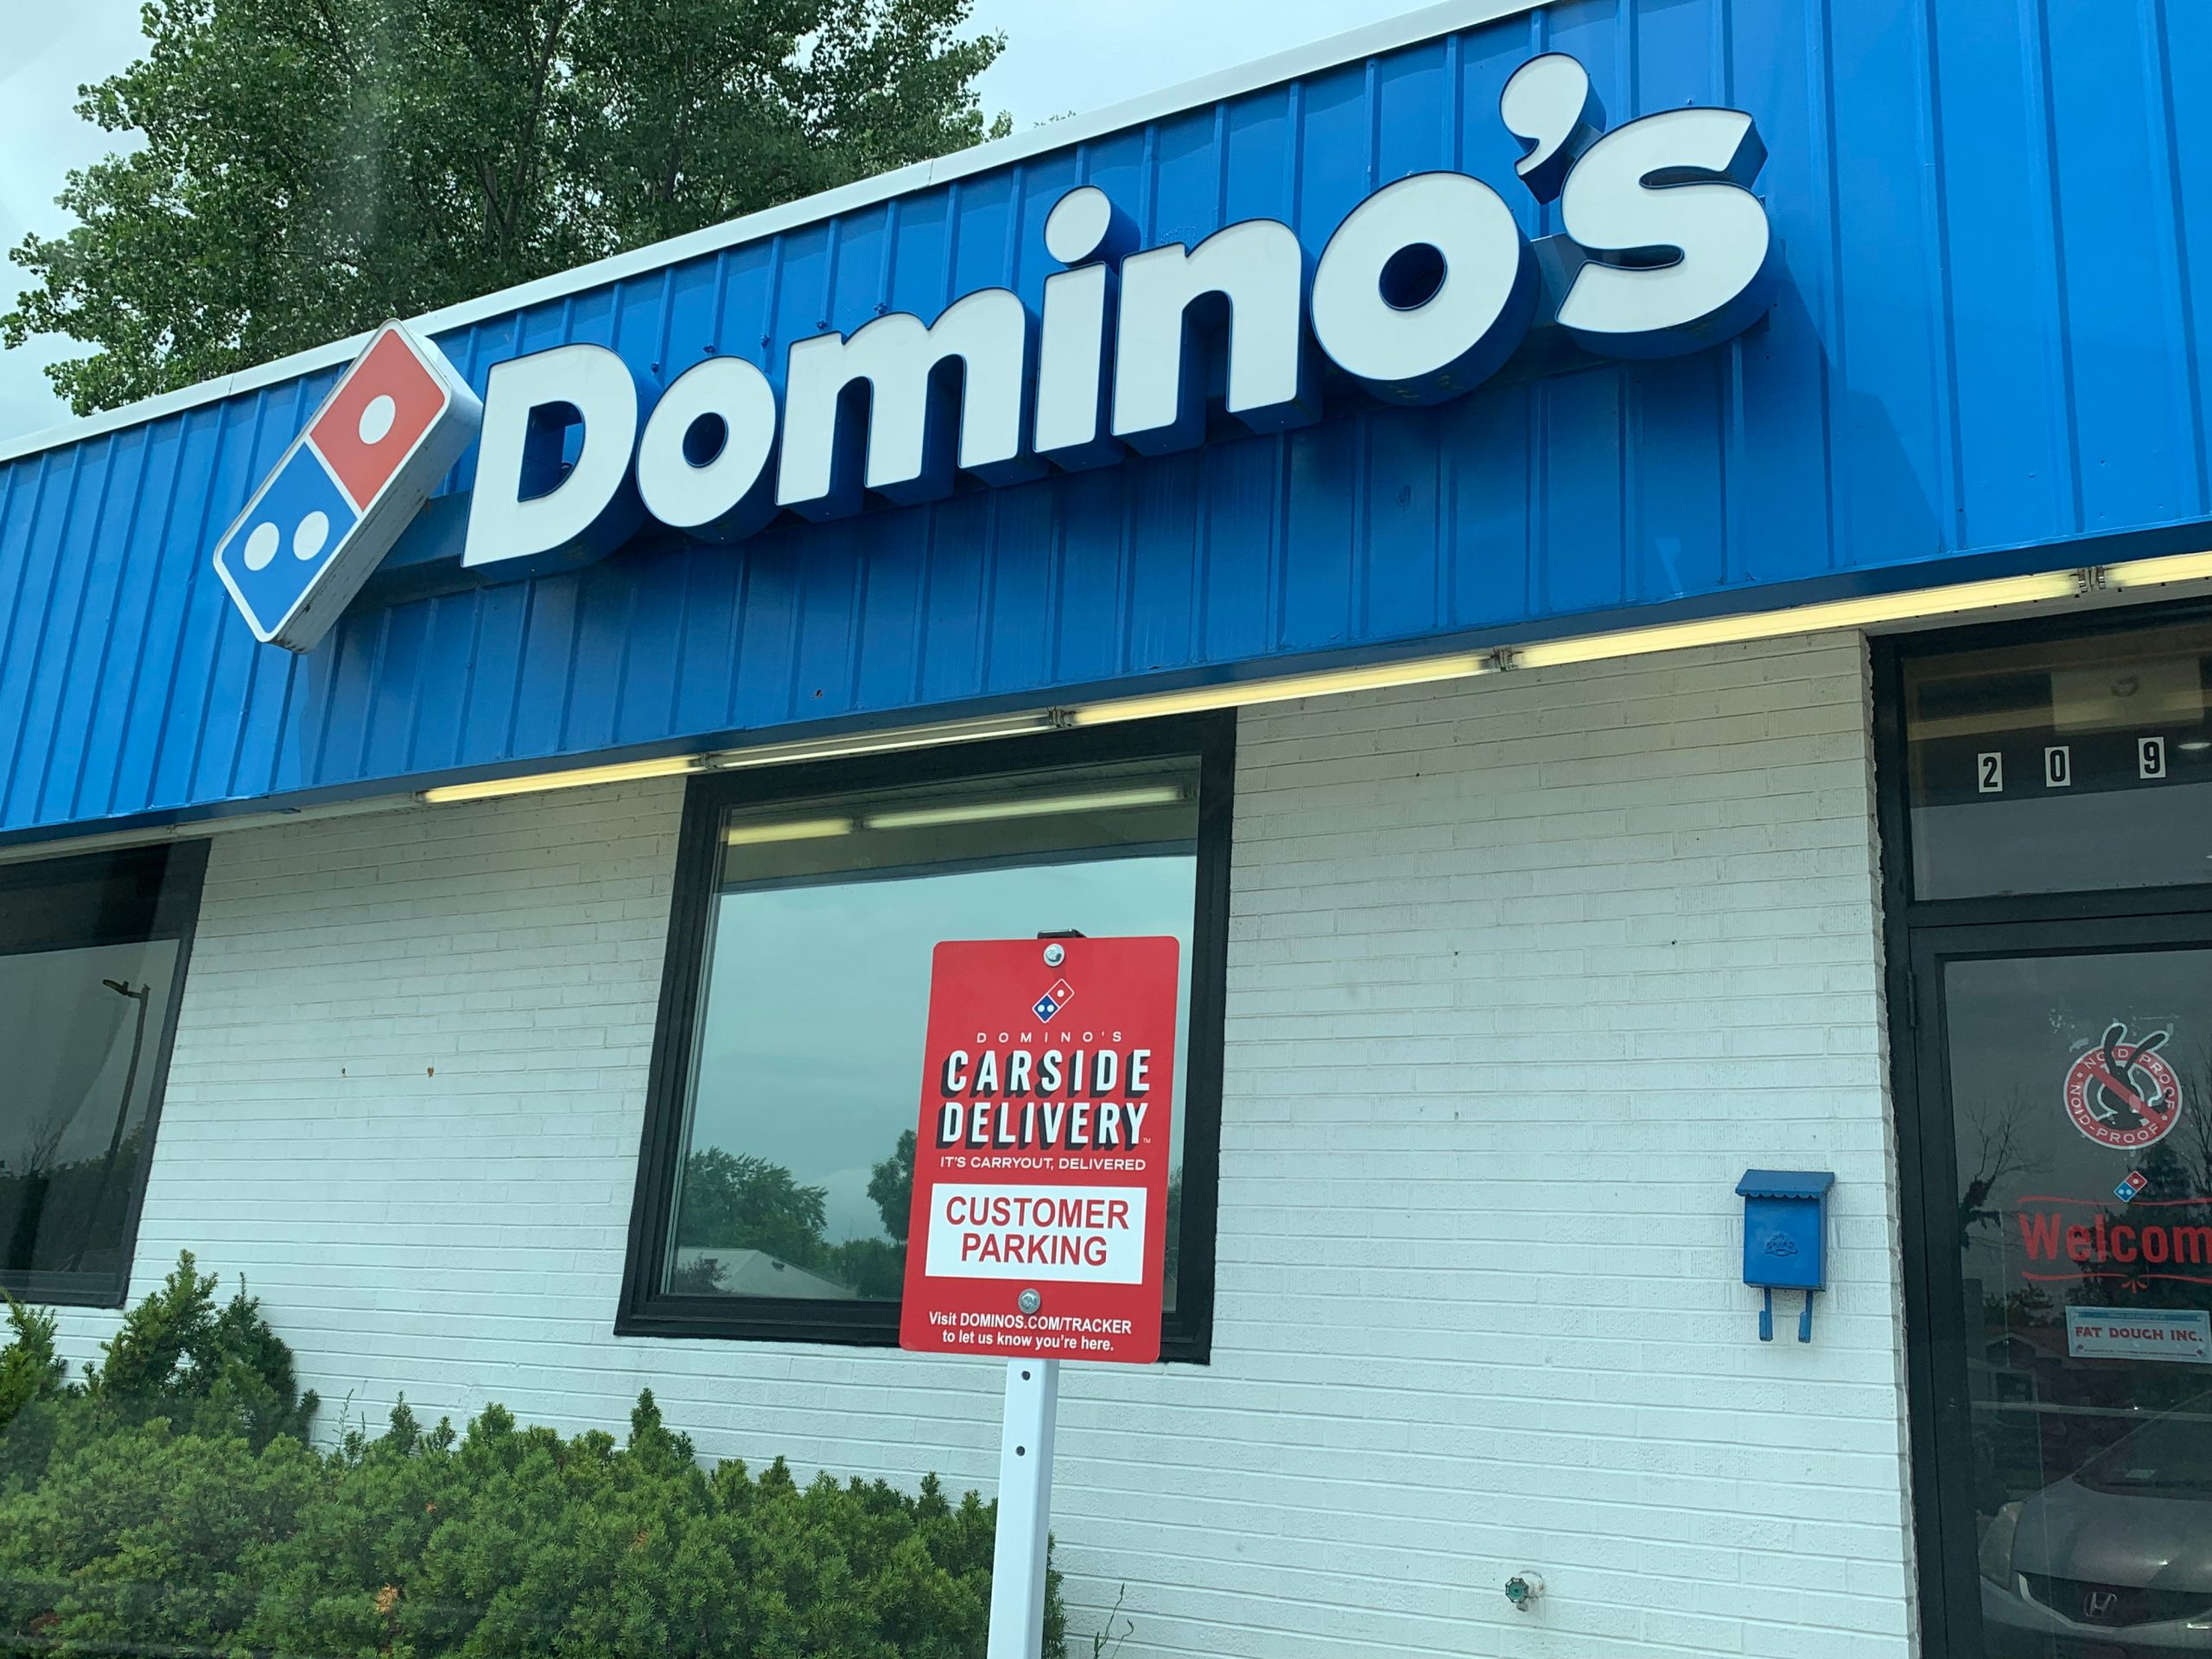 Dominos' carside delivery